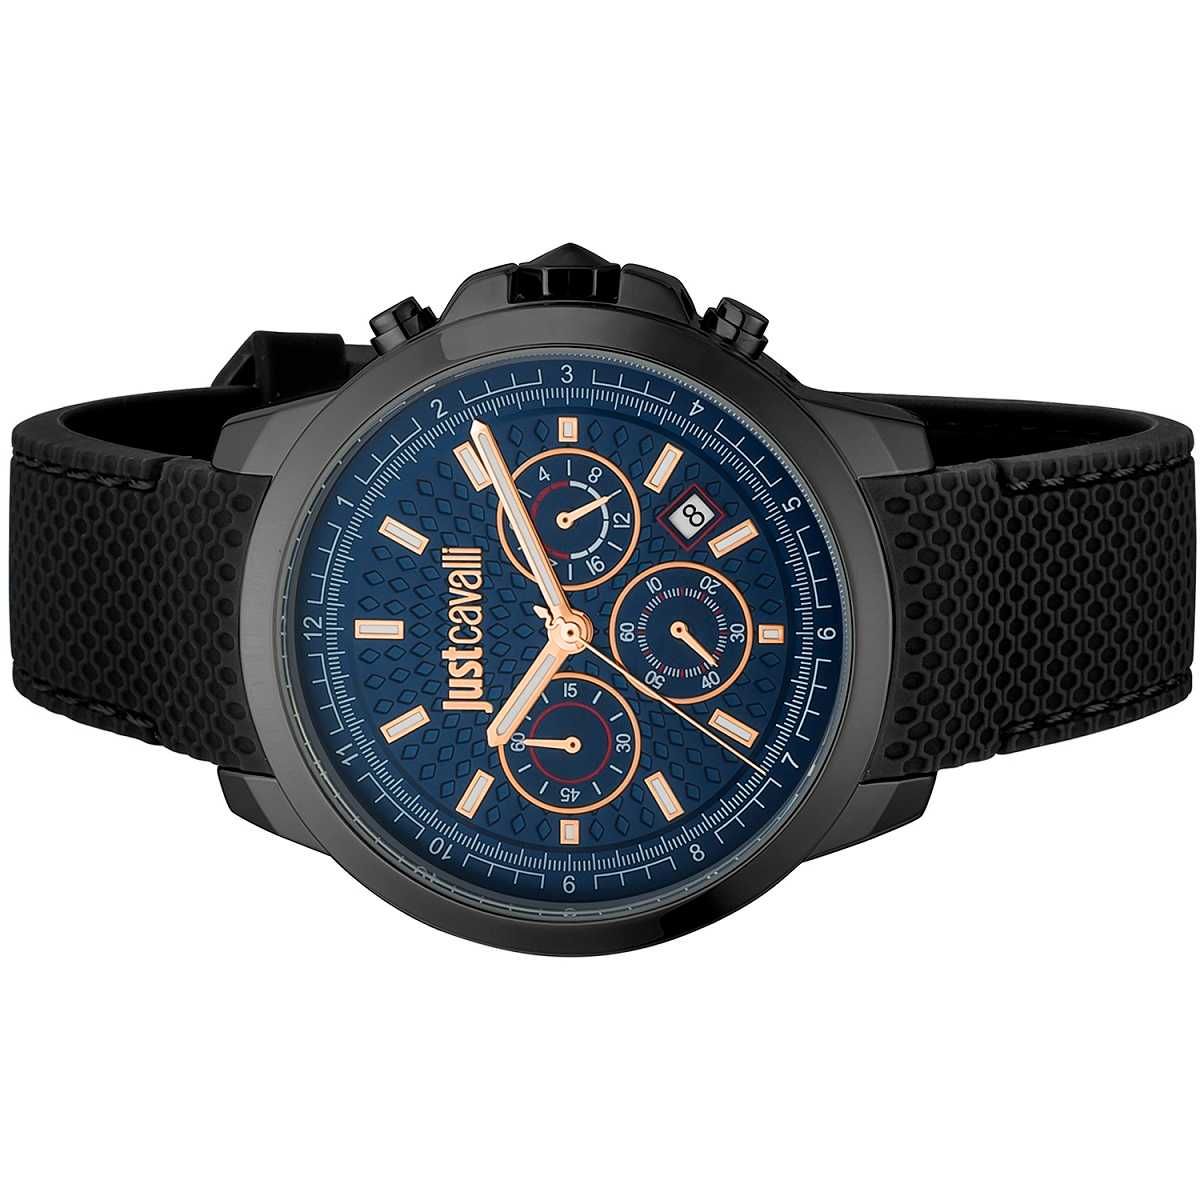 JUST CAVALLI – Мъжки часовник с хронограф "BLACK BLUE & GOLD" нов